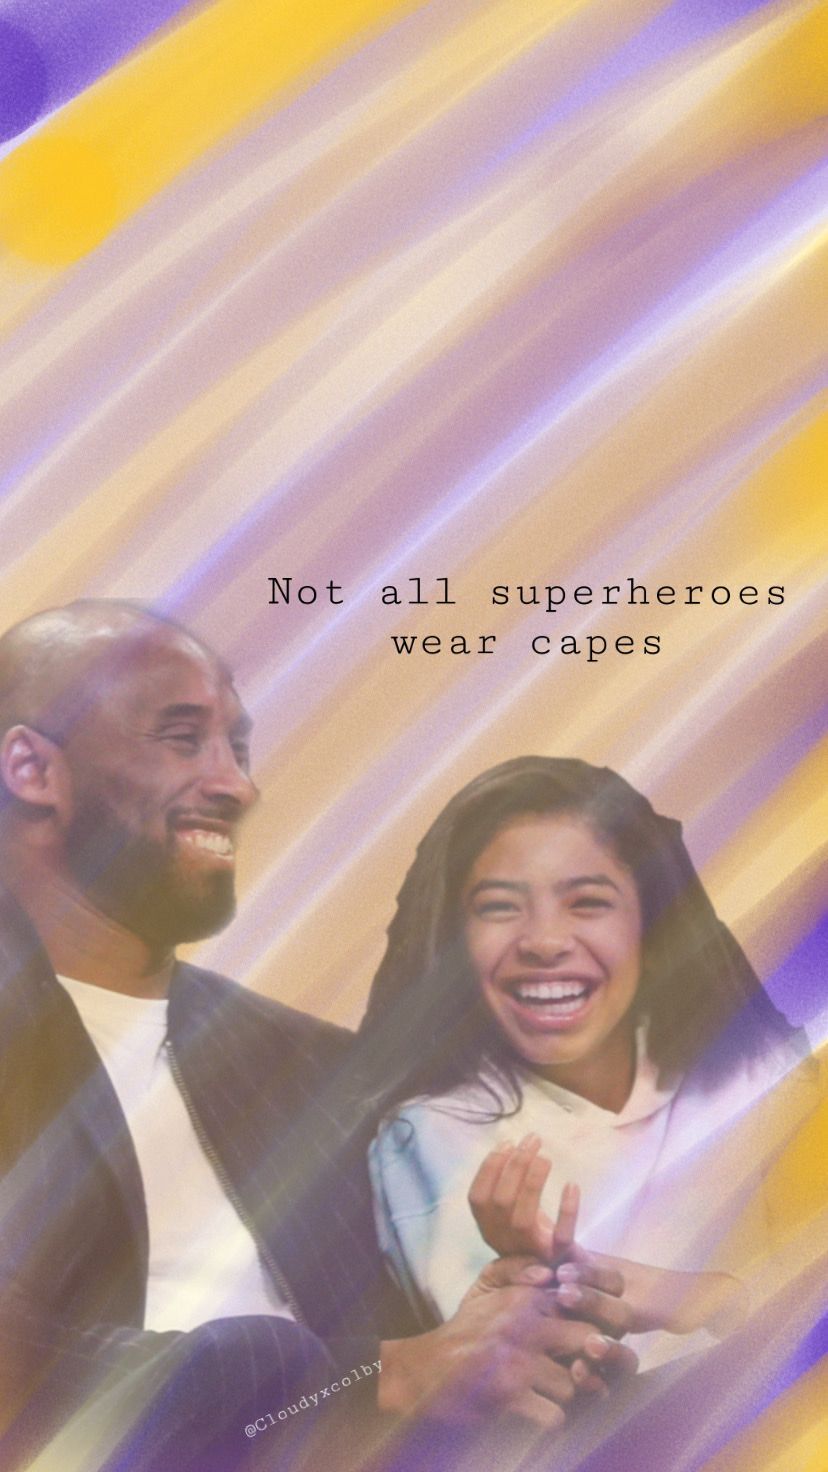 Kobe and Gianna Bryant smiling on a colorful background - Kobe Bryant